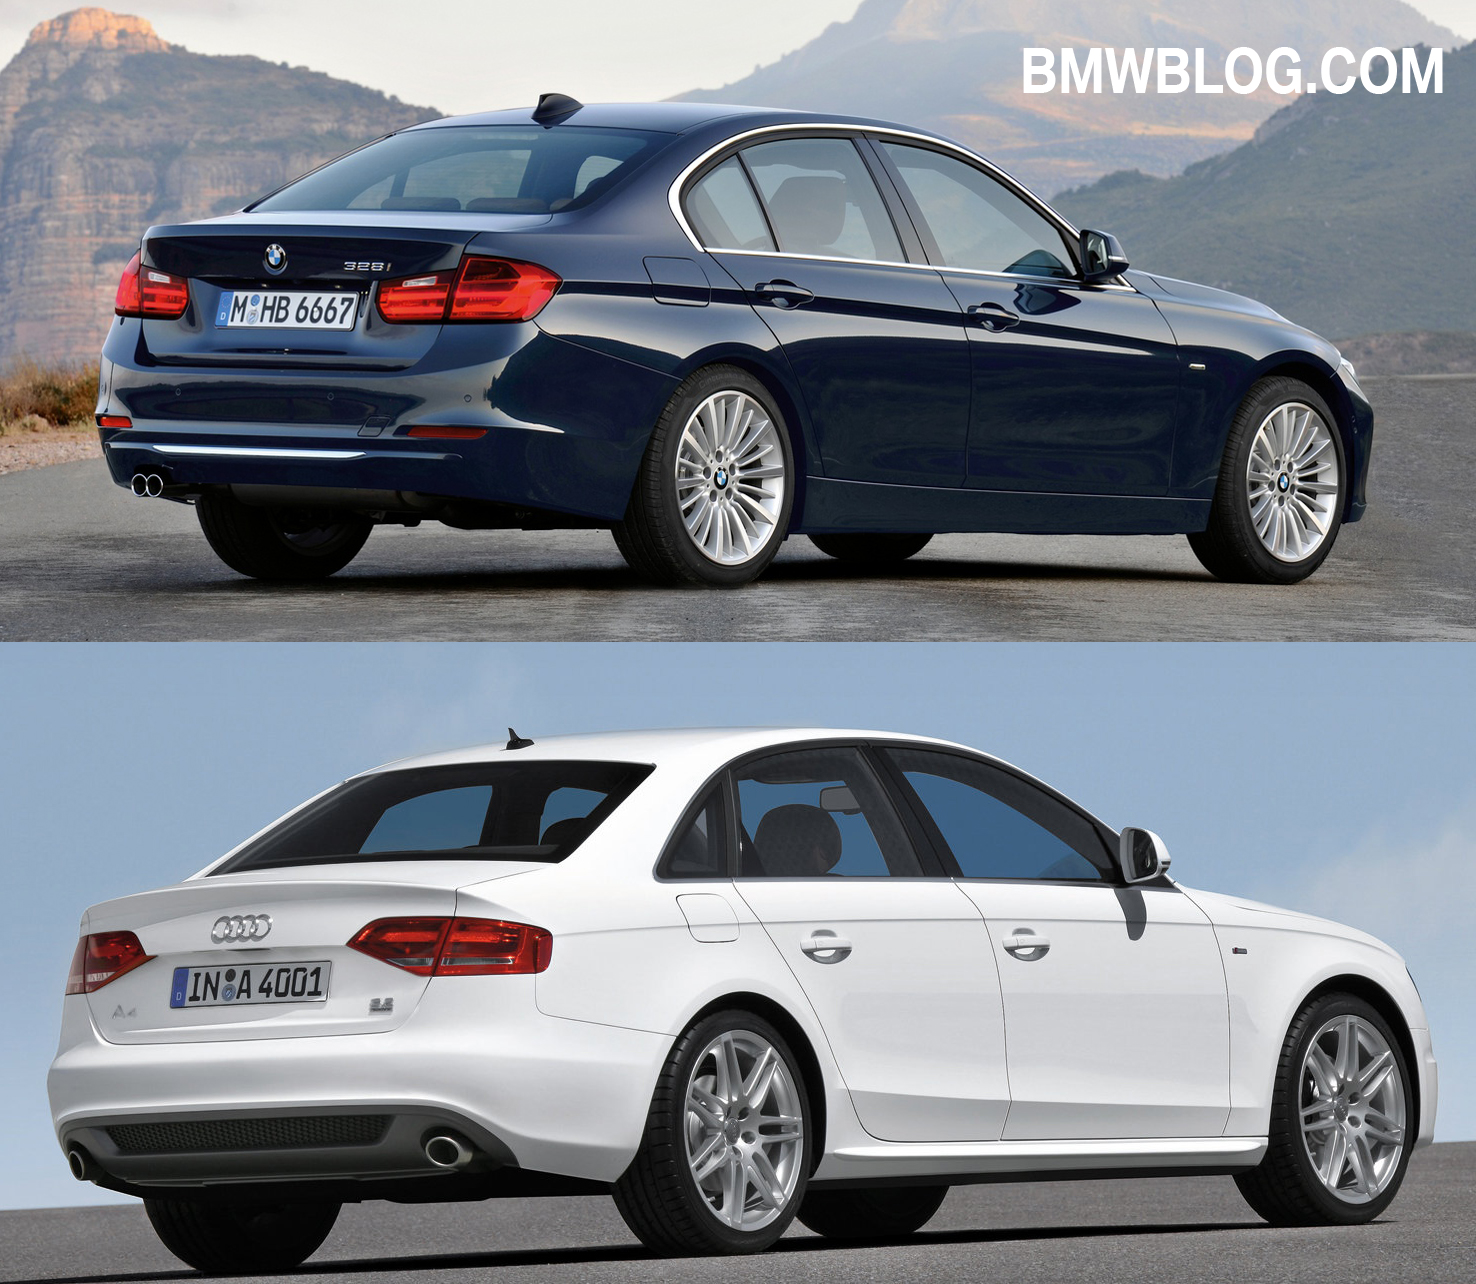 BMW-3-series-vs-audi-a4-photo2.jpg